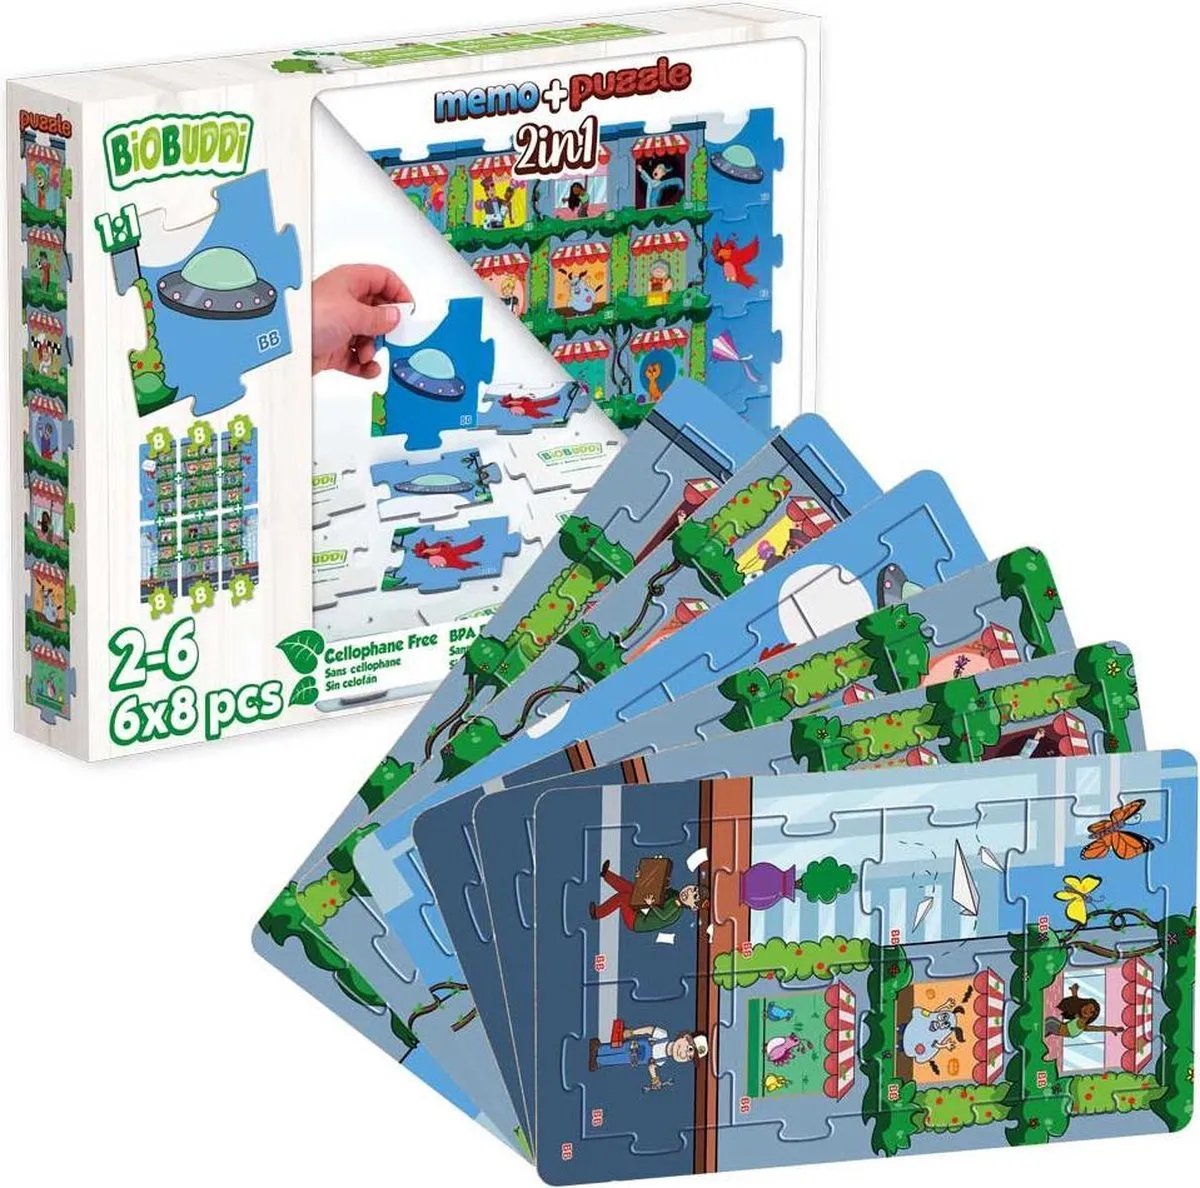 Biobuddi Puzzels Memory City Life BB-8005 speelgoed